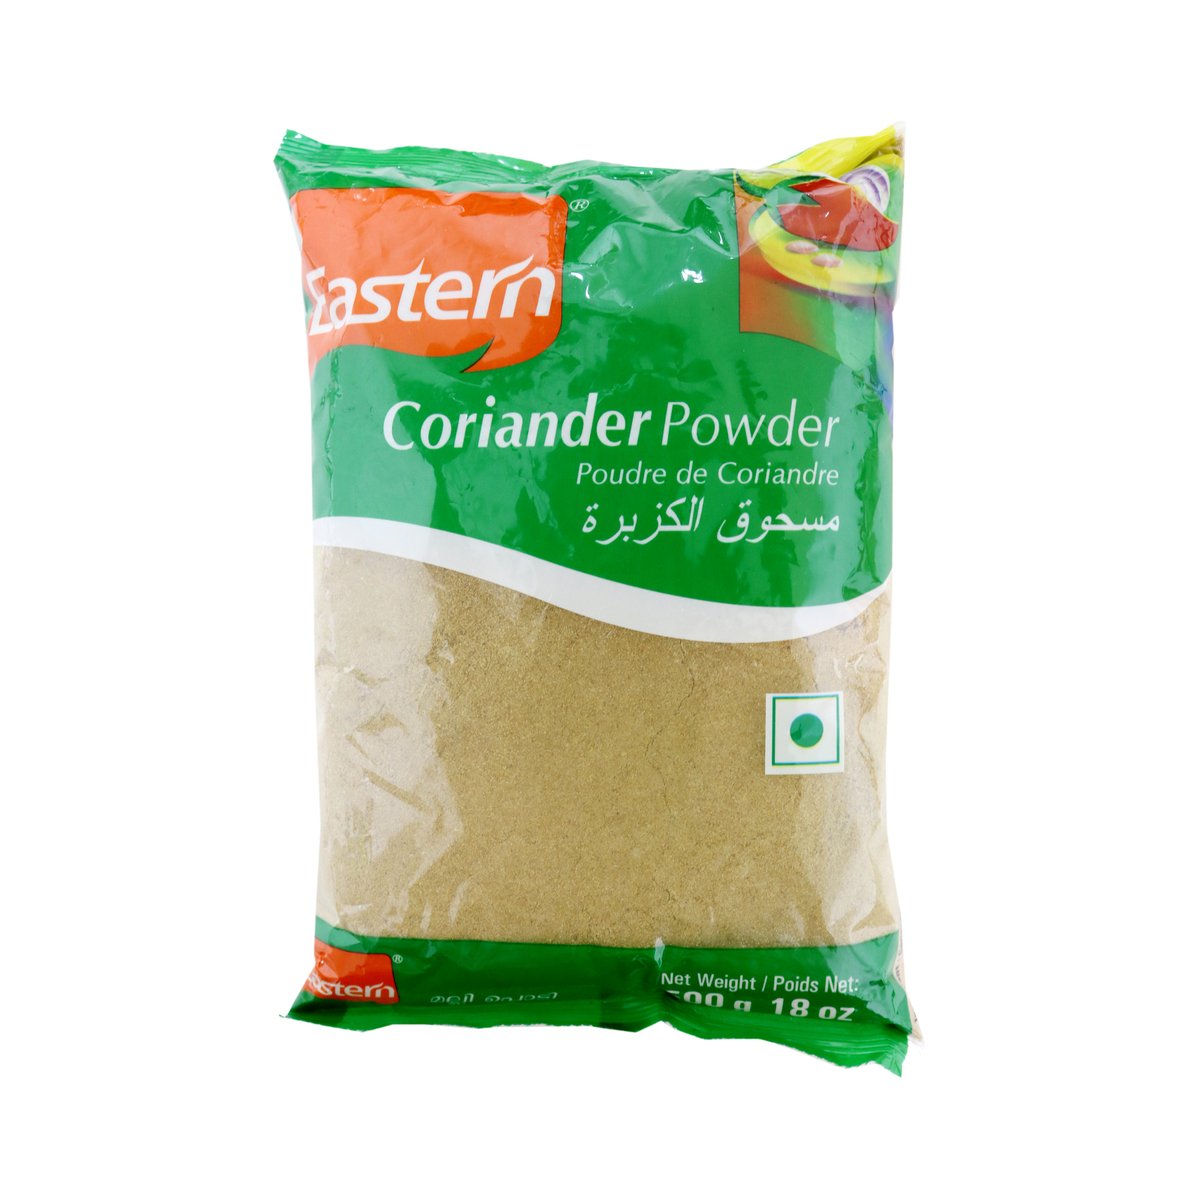 Eastern Coriander Powder 500g